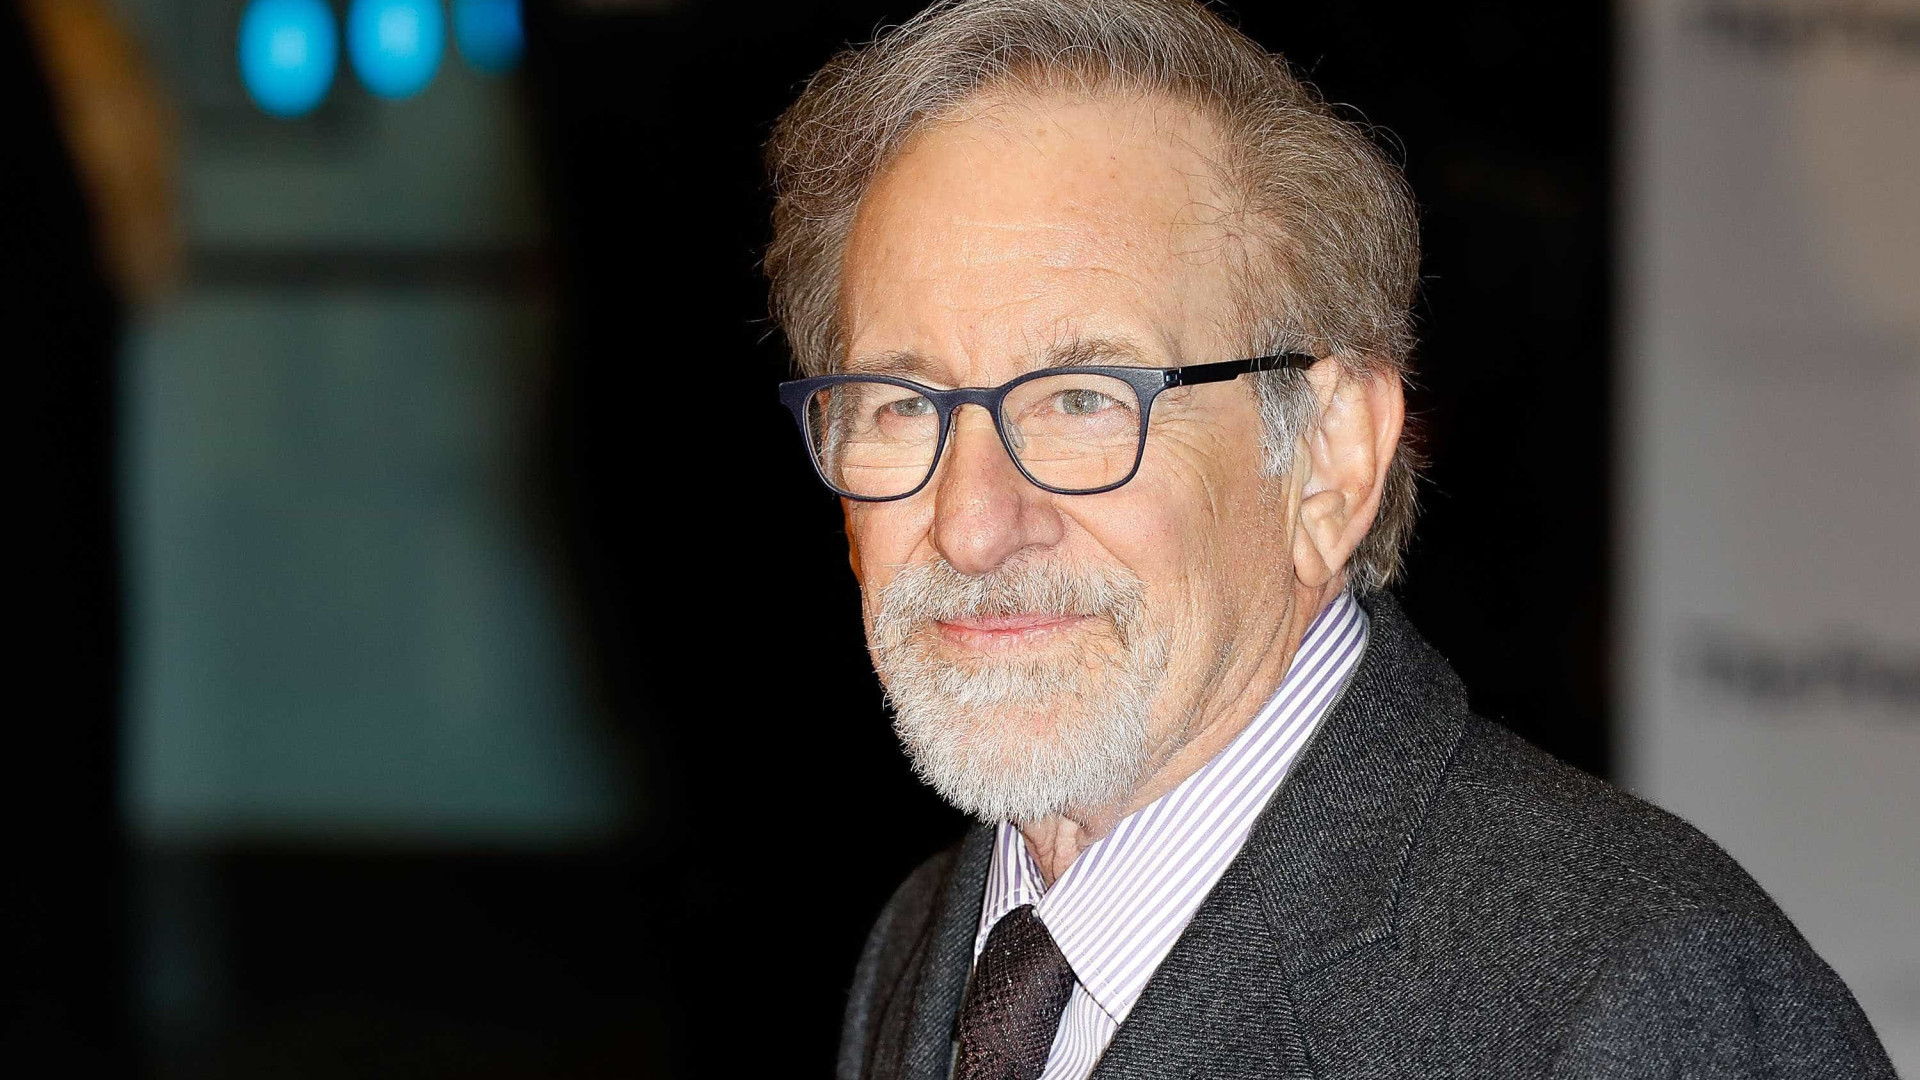 Justiça dá medida protetiva a Steven Spielberg contra fã que o ameaça de morte